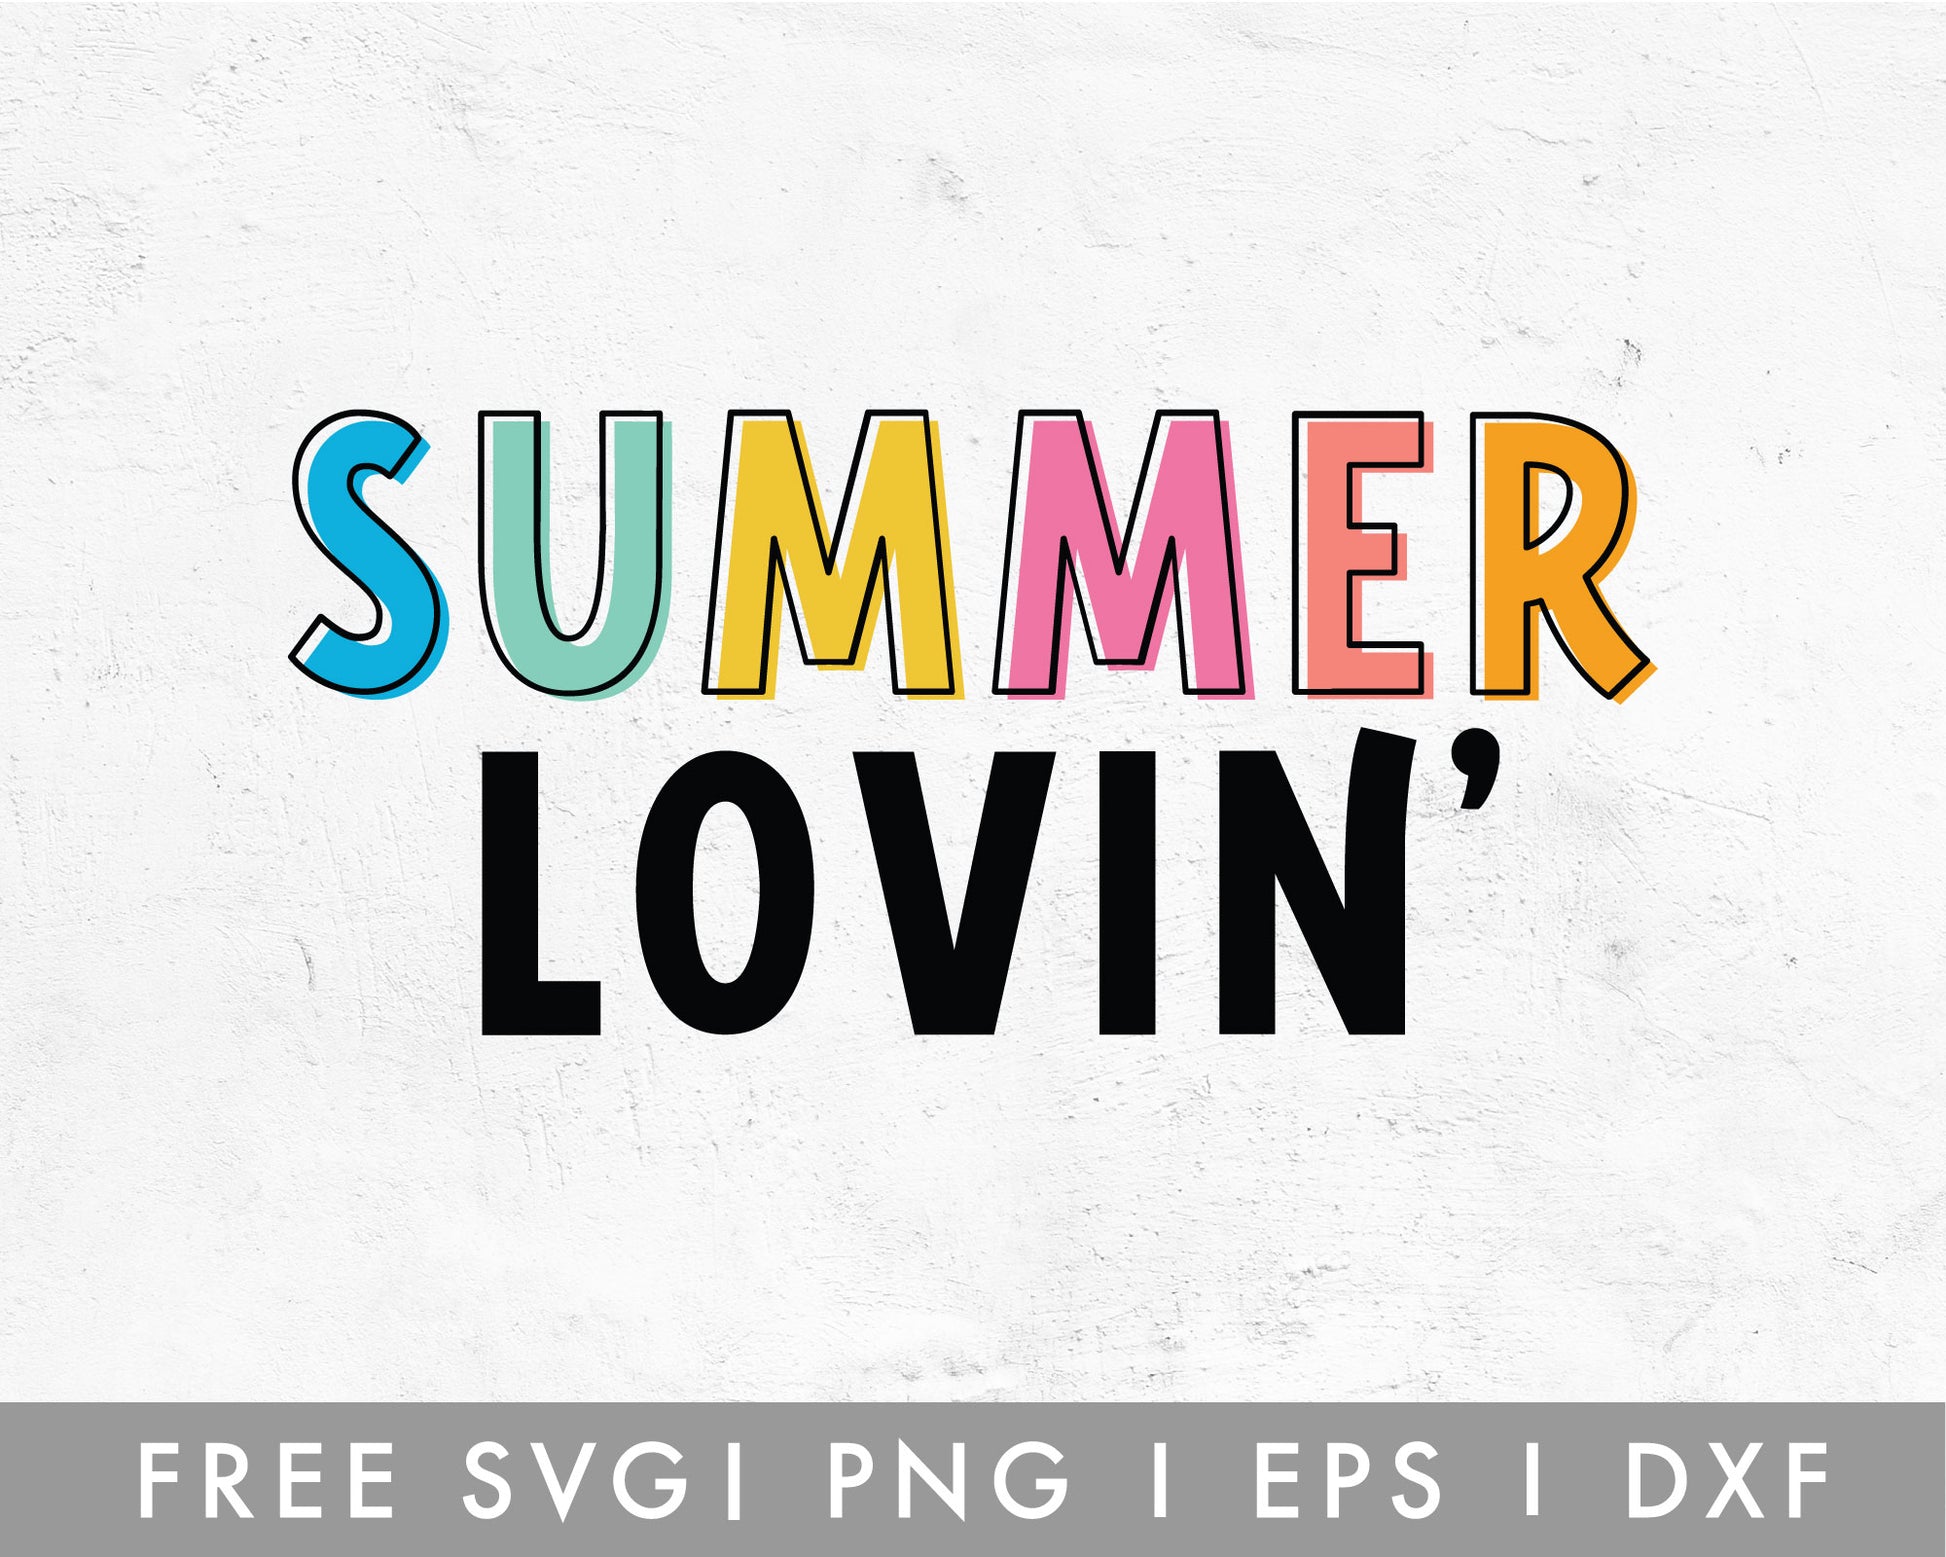 FREE Summer SVG | Summer Lovin' SVG Cut File for Cricut, Cameo Silhouette | Free SVG Cut File